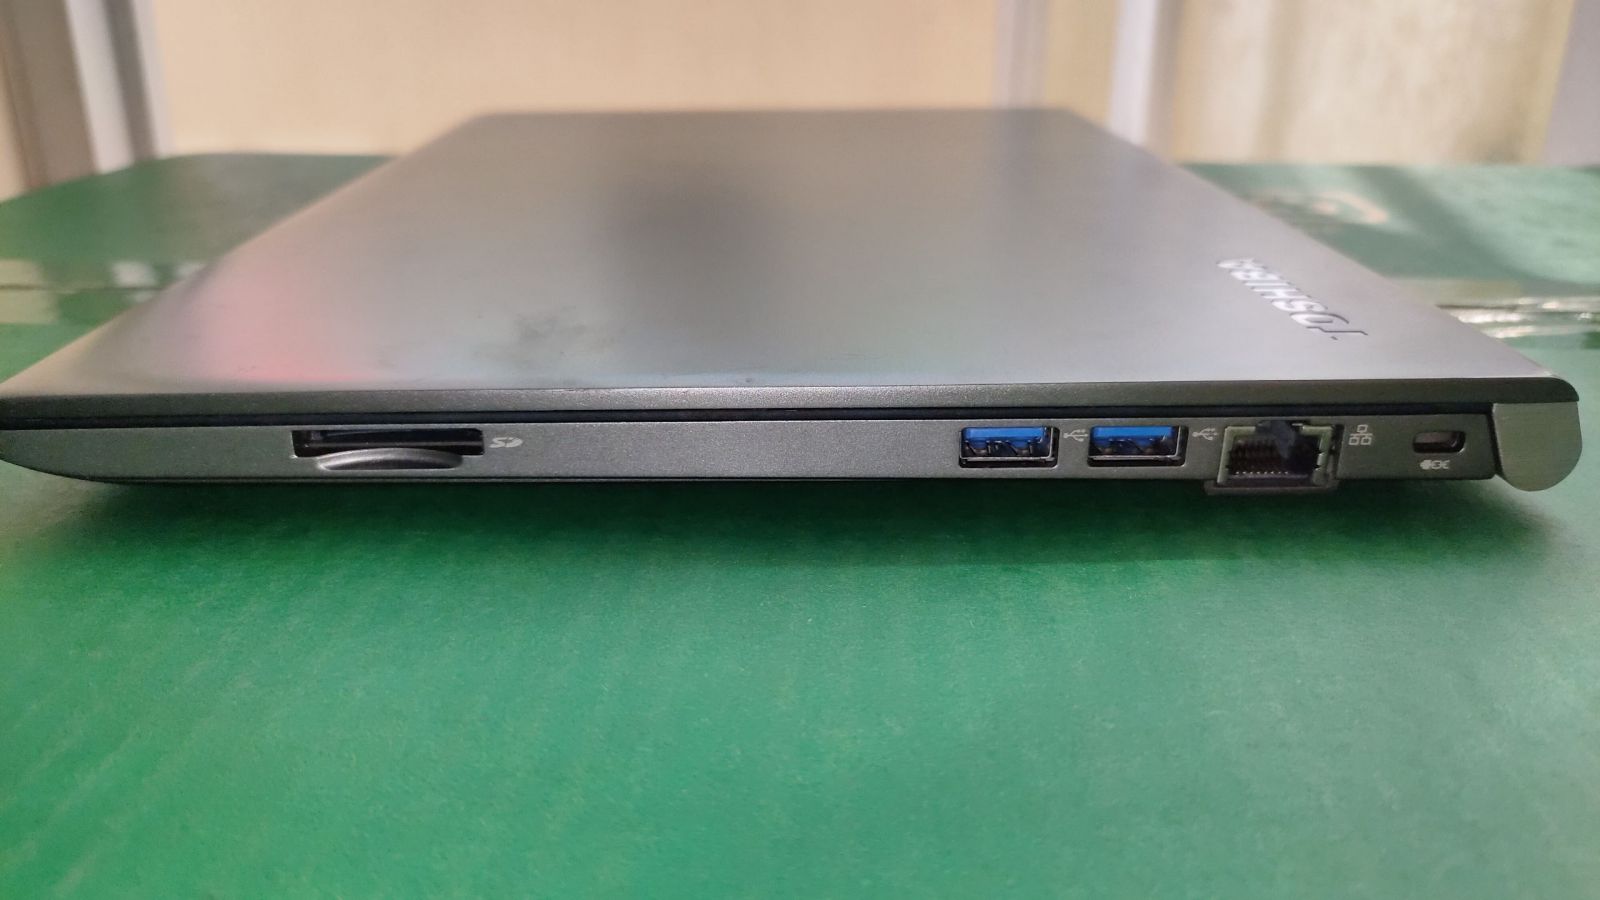 Laptop xách tay Toshiba Dynabook R63/D i5 6200U (Nhật, 2nd)